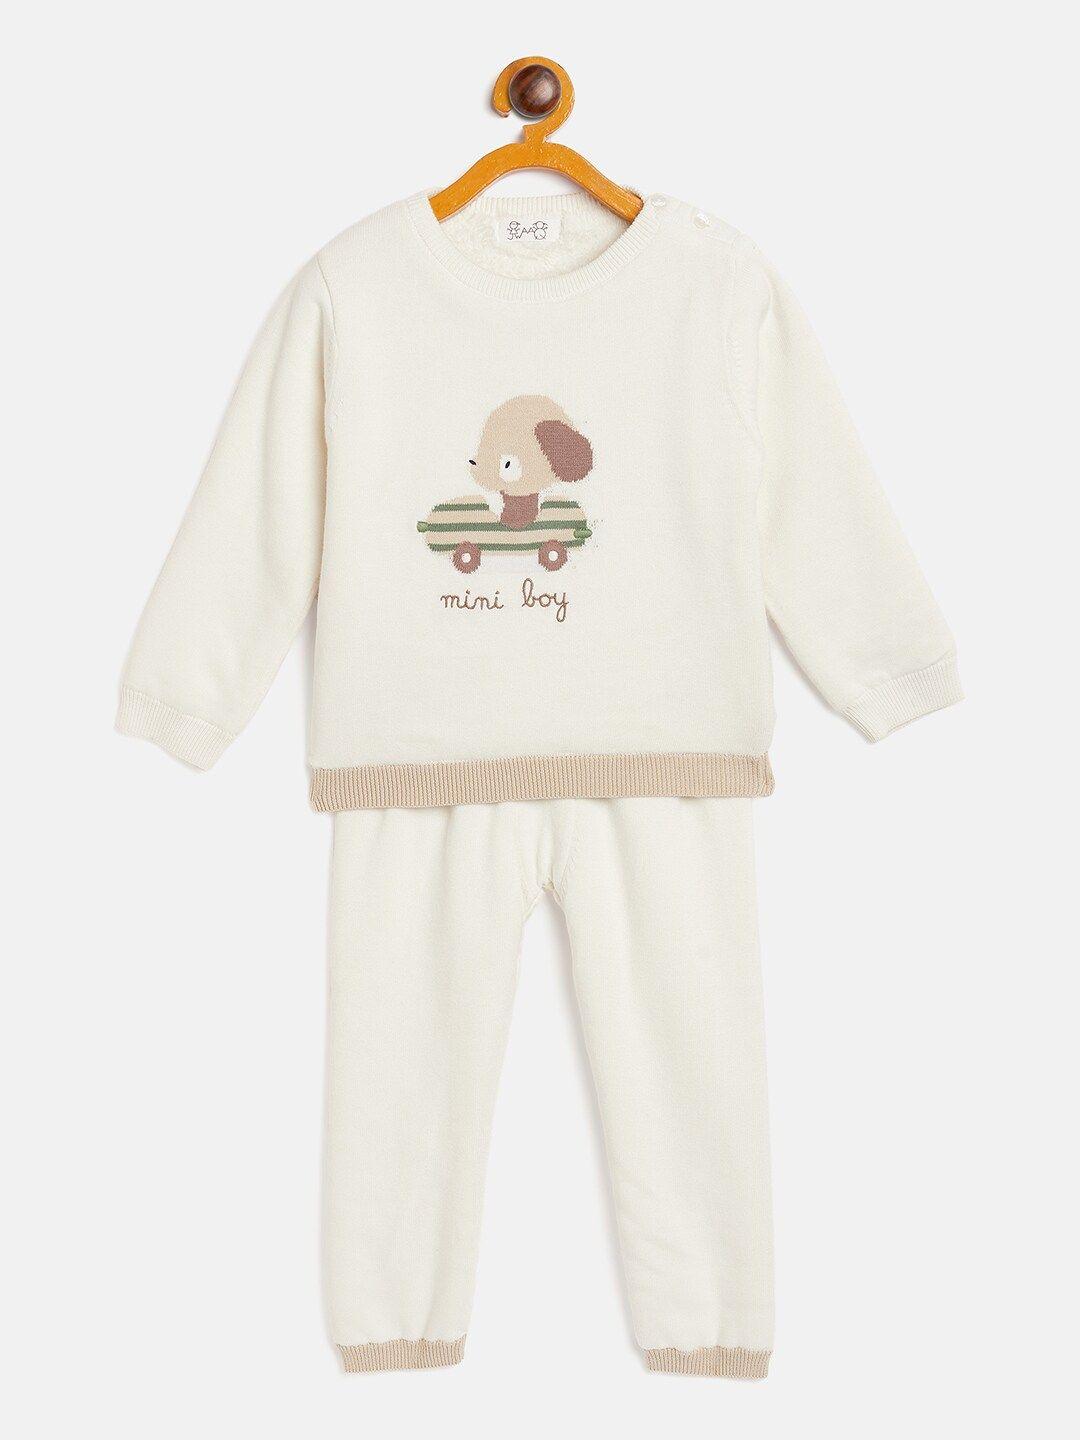 jwaaq infants printed top with pyjamas